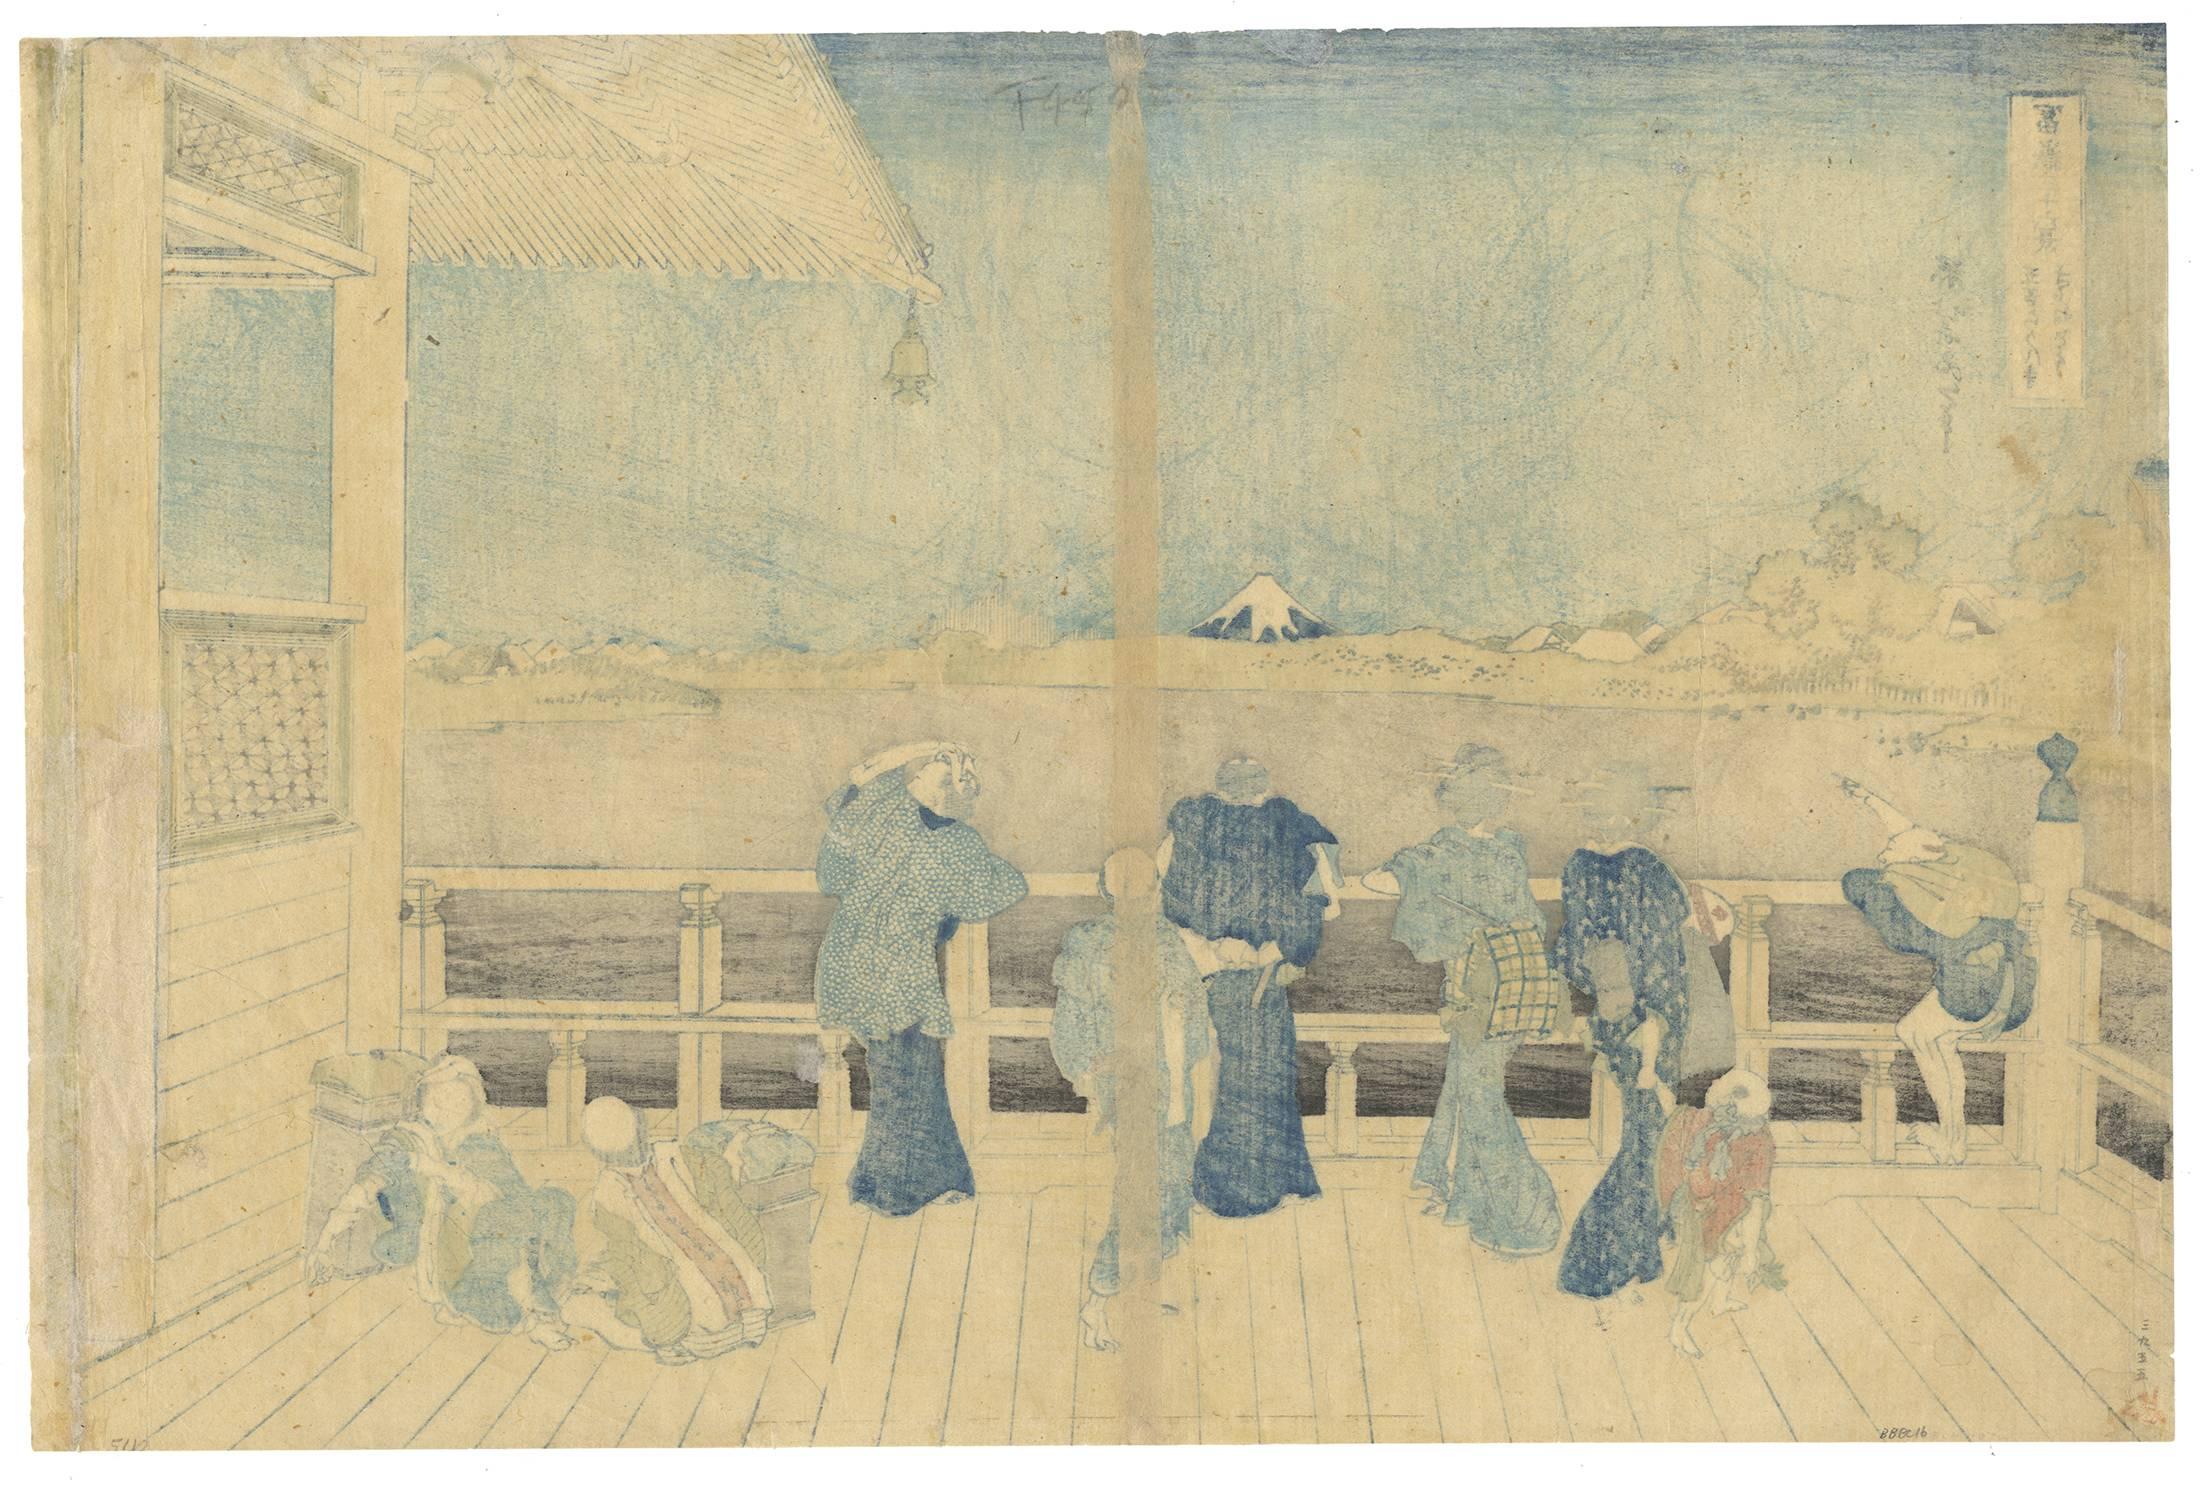 Artist: Hokusai Katsushika (1760 - 1849)
Title: 23. The Sazai Hall of the Five Hundred Rakan Temple
Series: Thirty-six Views of Mount Fuji
Publisher: Nishimura Yohachi
Published circa 1831-1835

This print shows a number of pilgrims gazing at Mt.